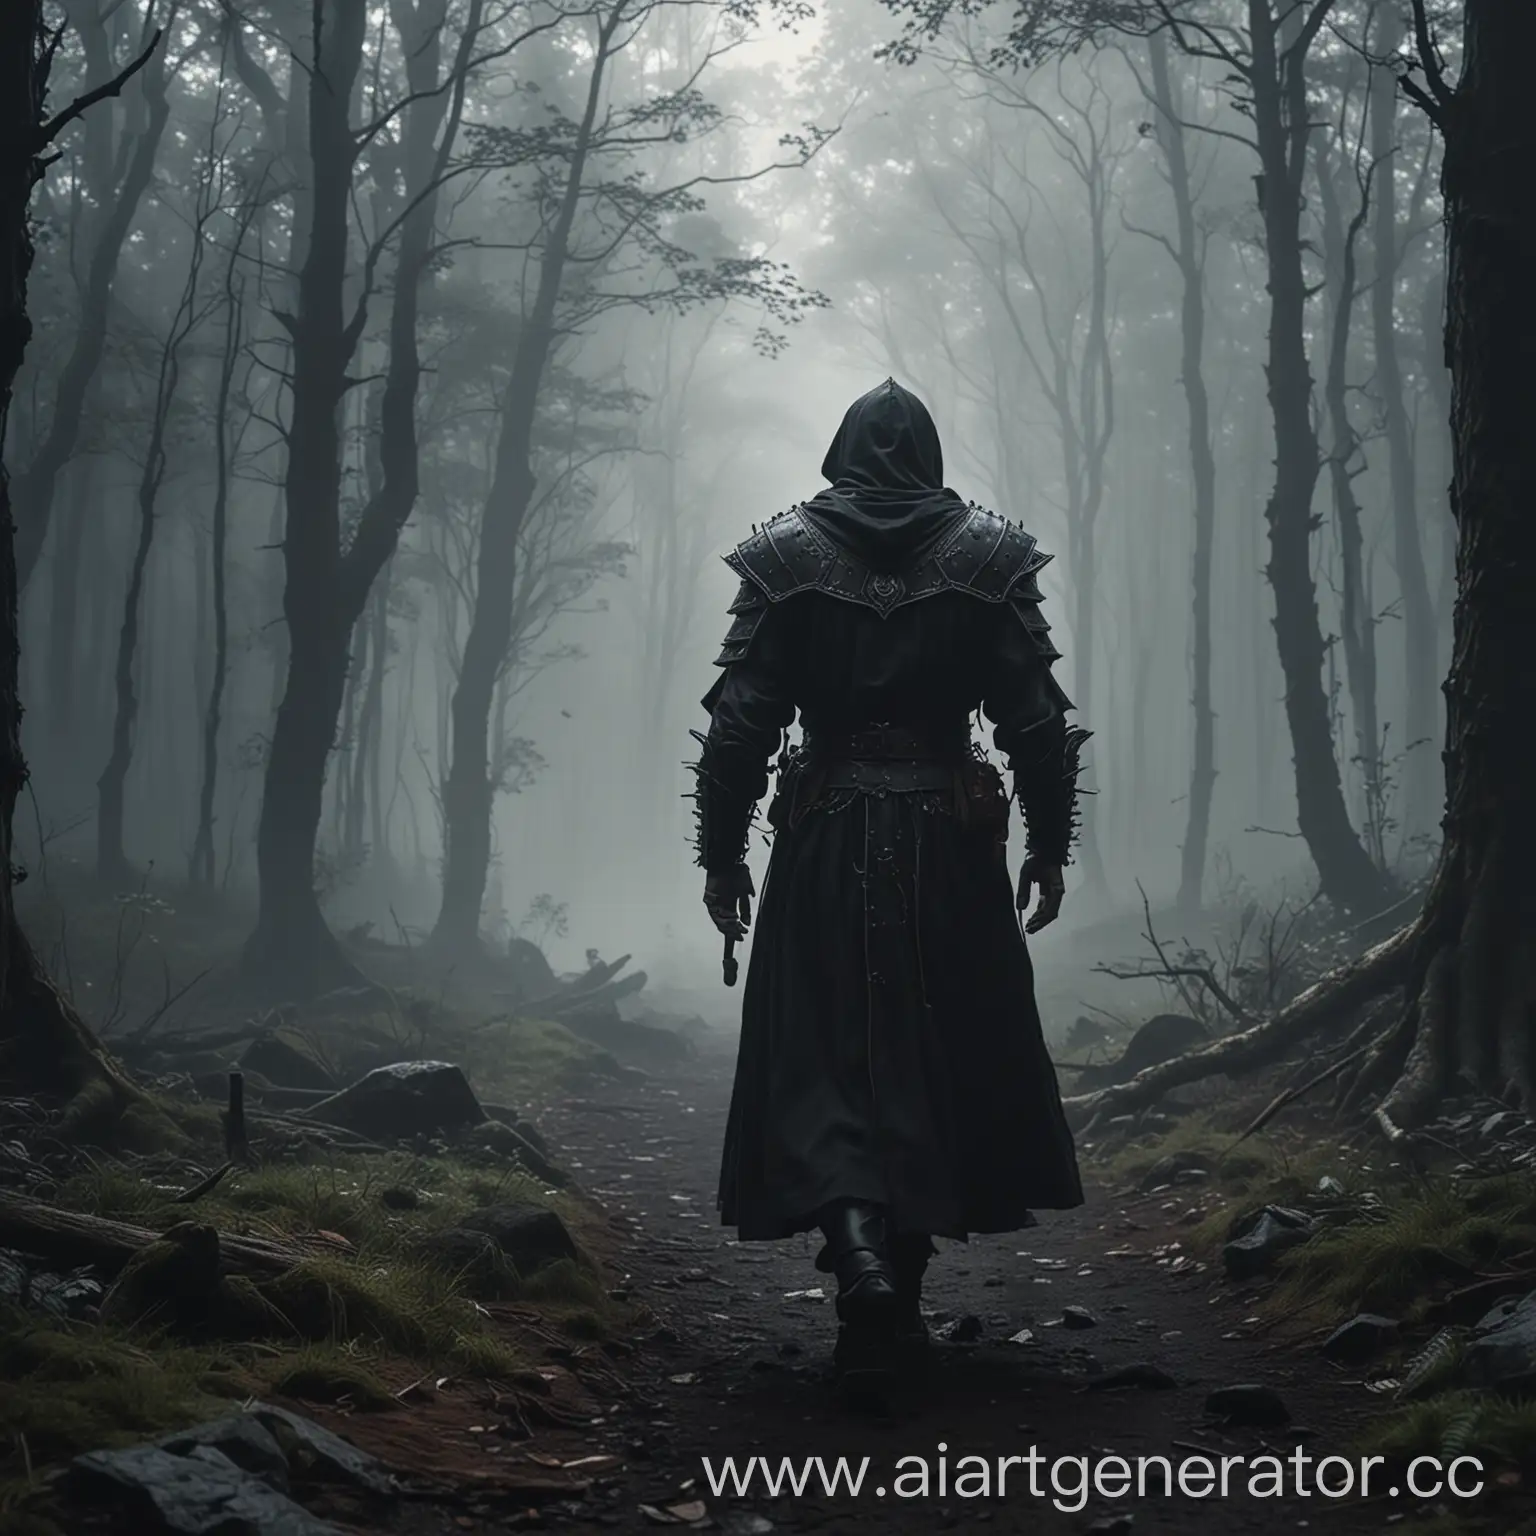 man, priest, in dark armor, wanders through the misty forest, 4k quality